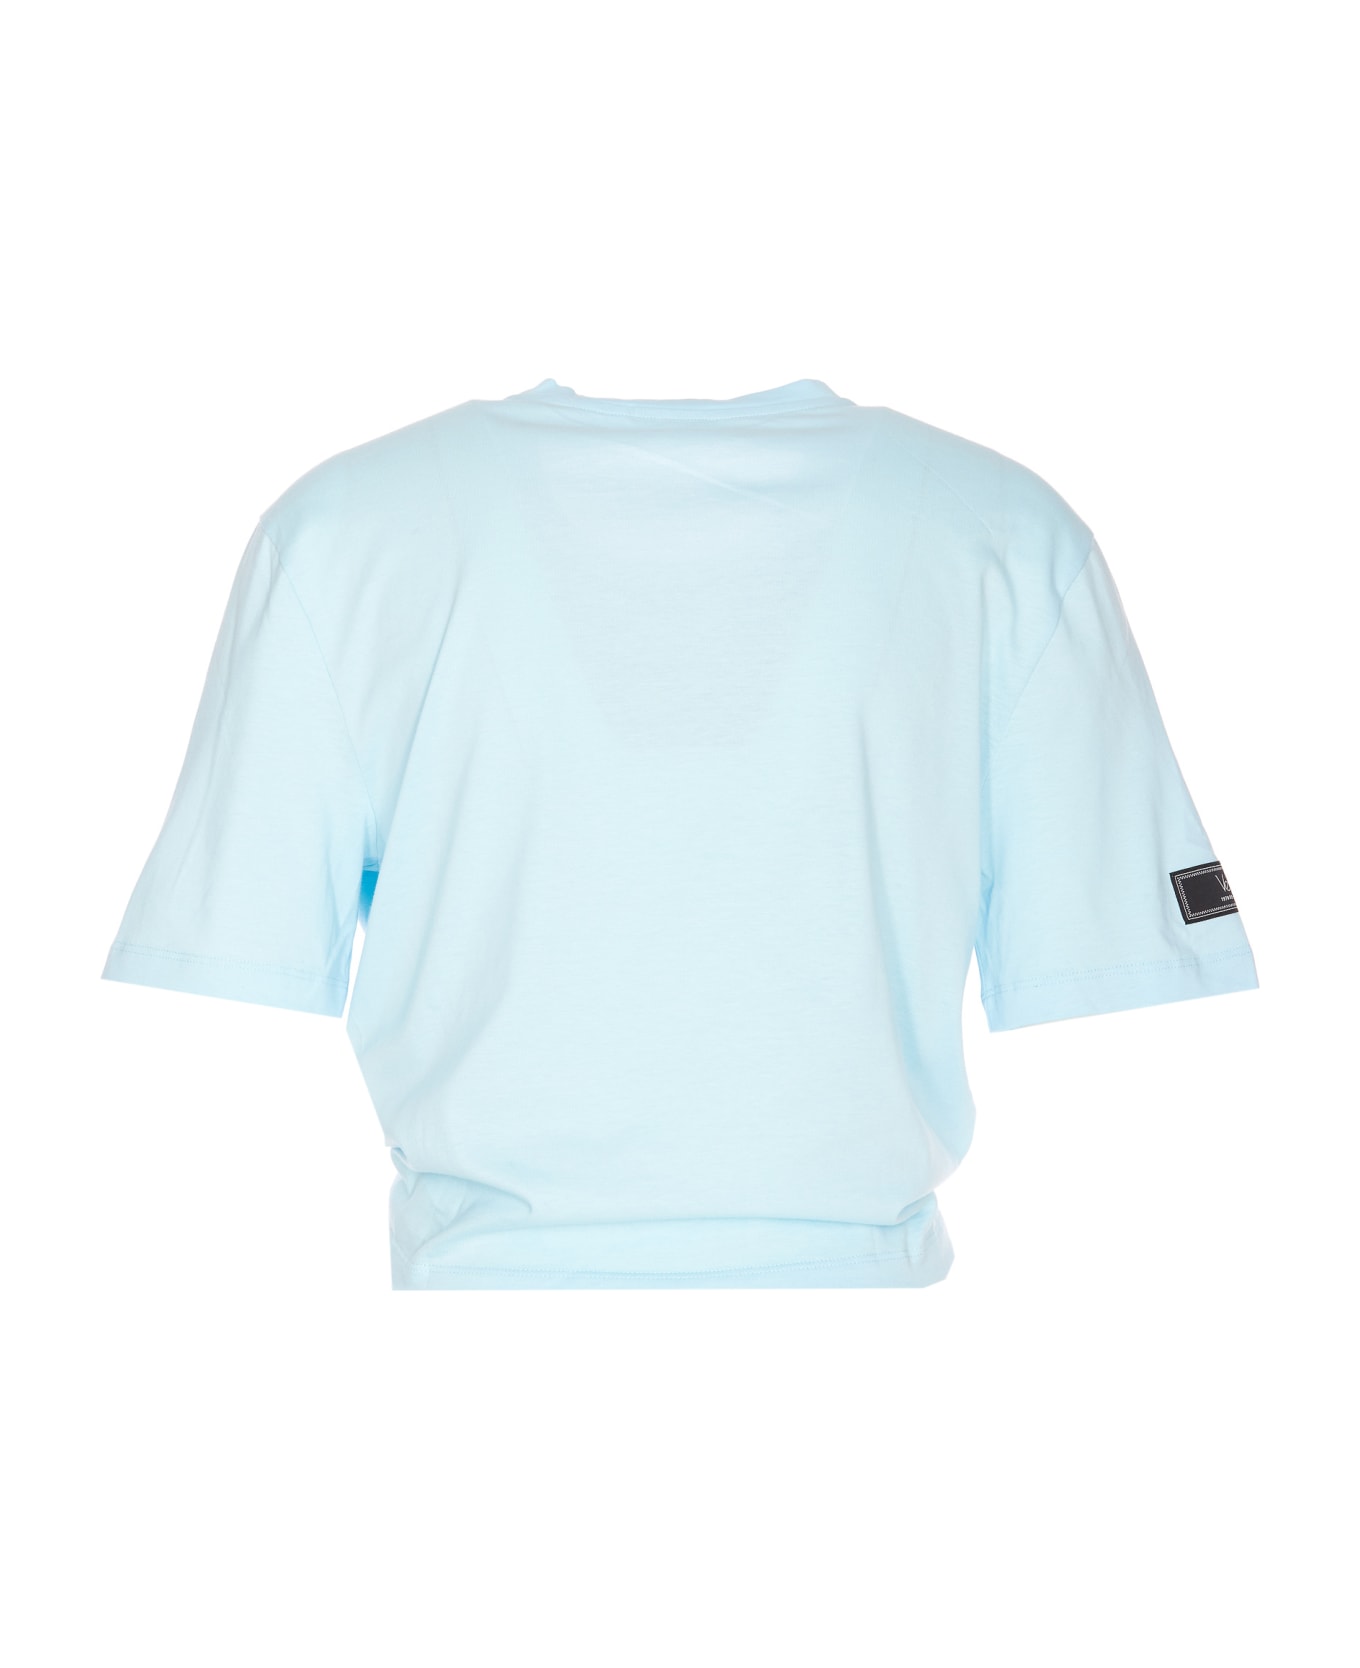 Versace Milano Stamp Crop T-shirt - Blue